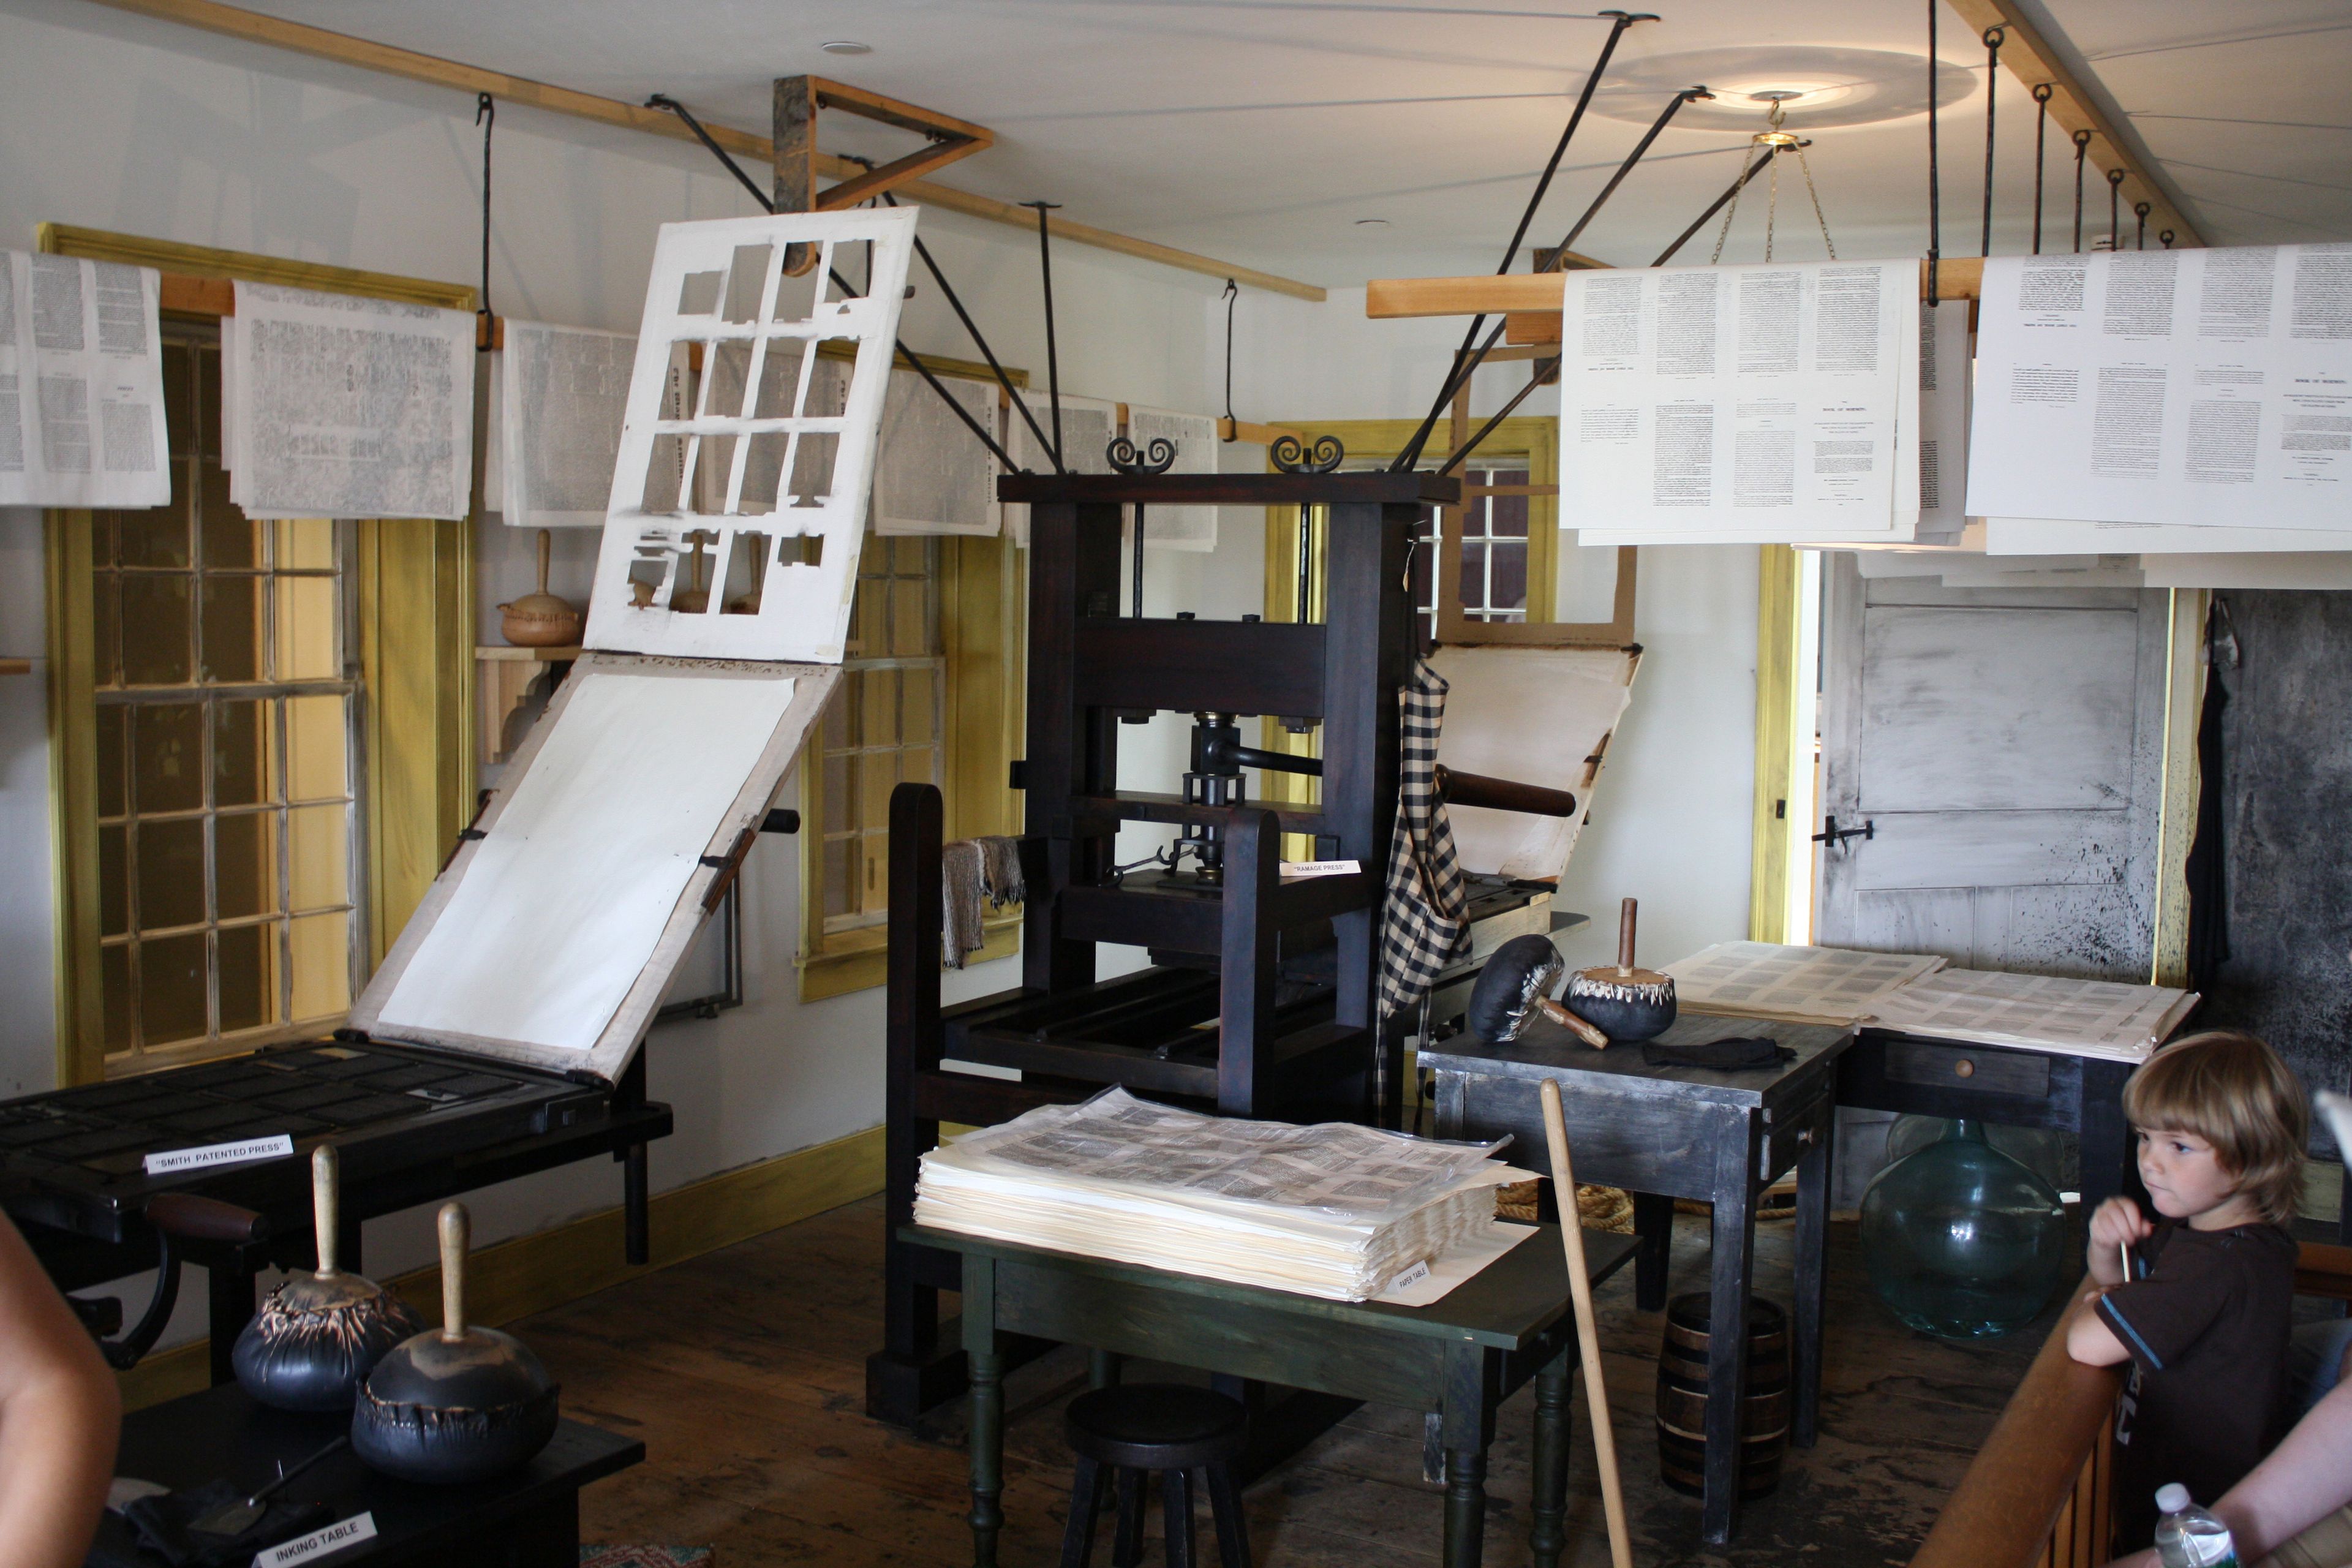 The historic printing press in Palmyra, New York.